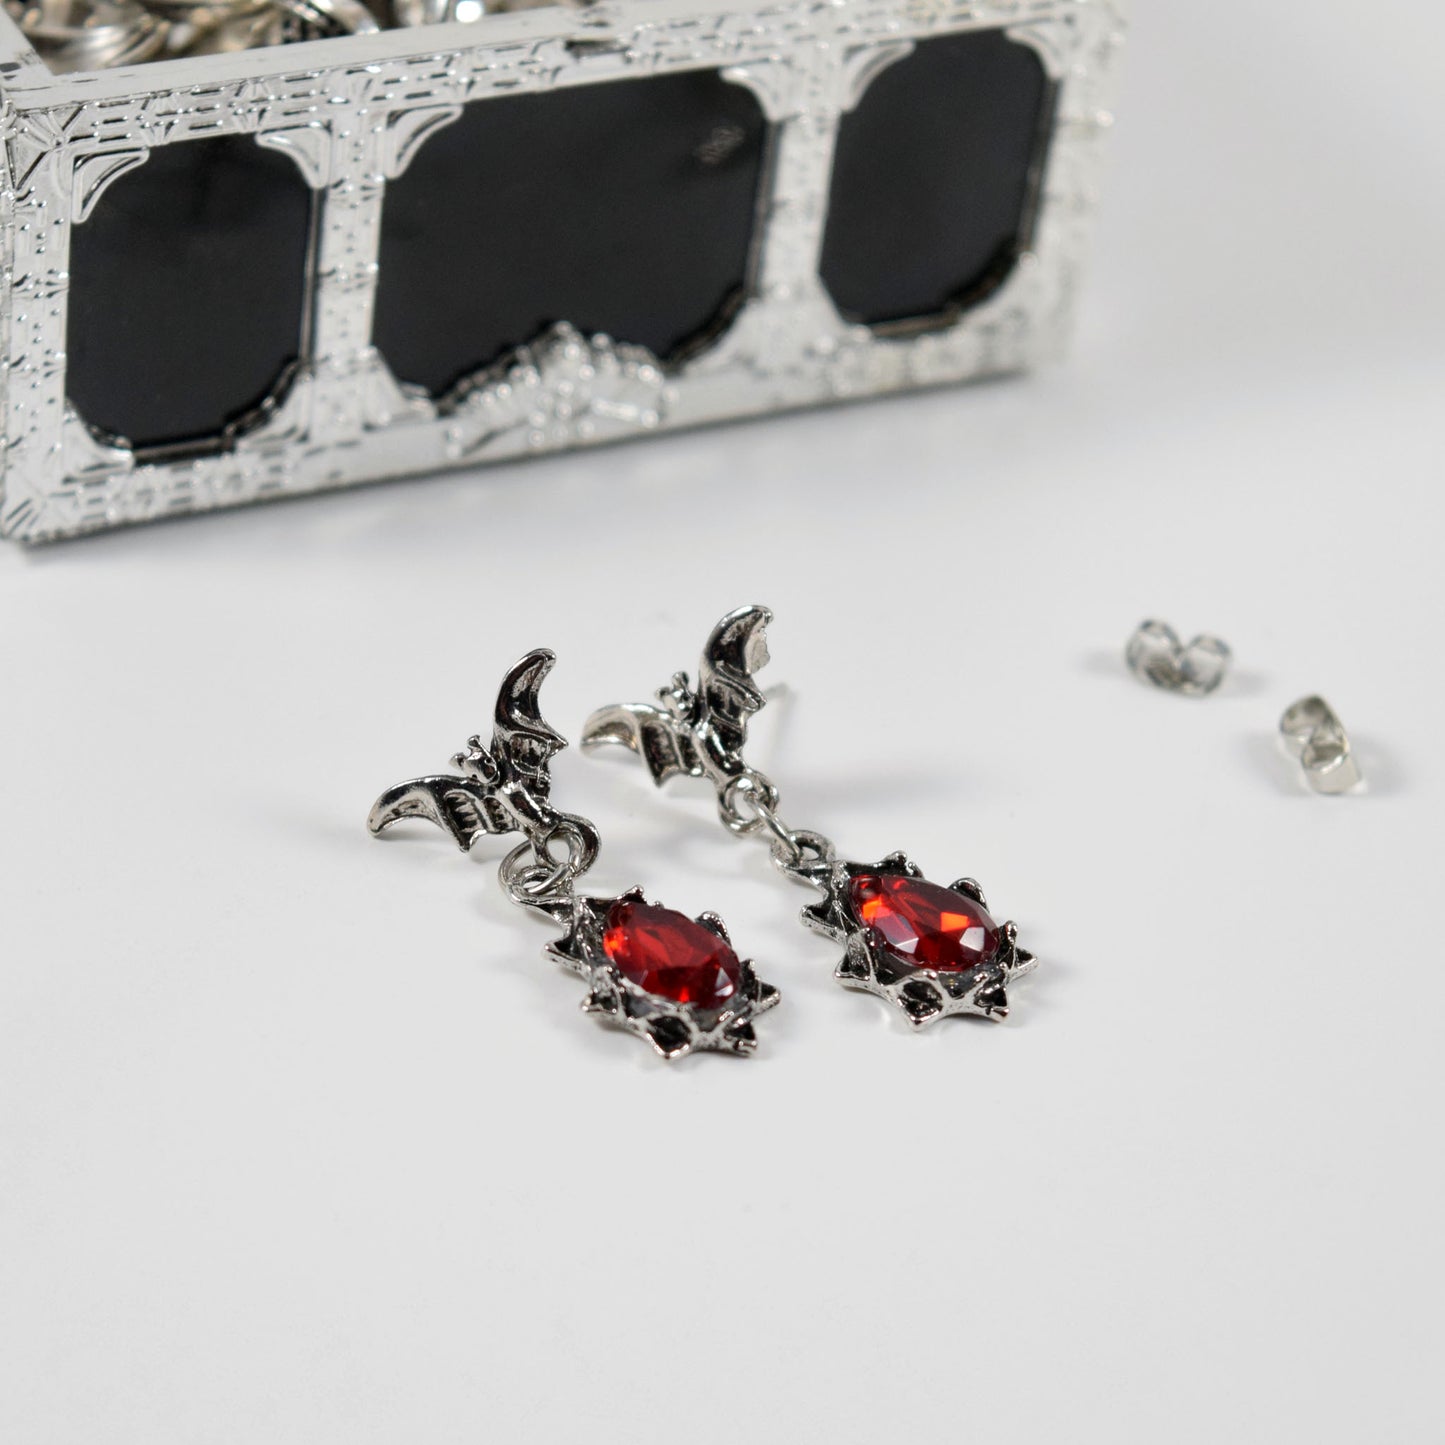 Bejeweled bat earrings